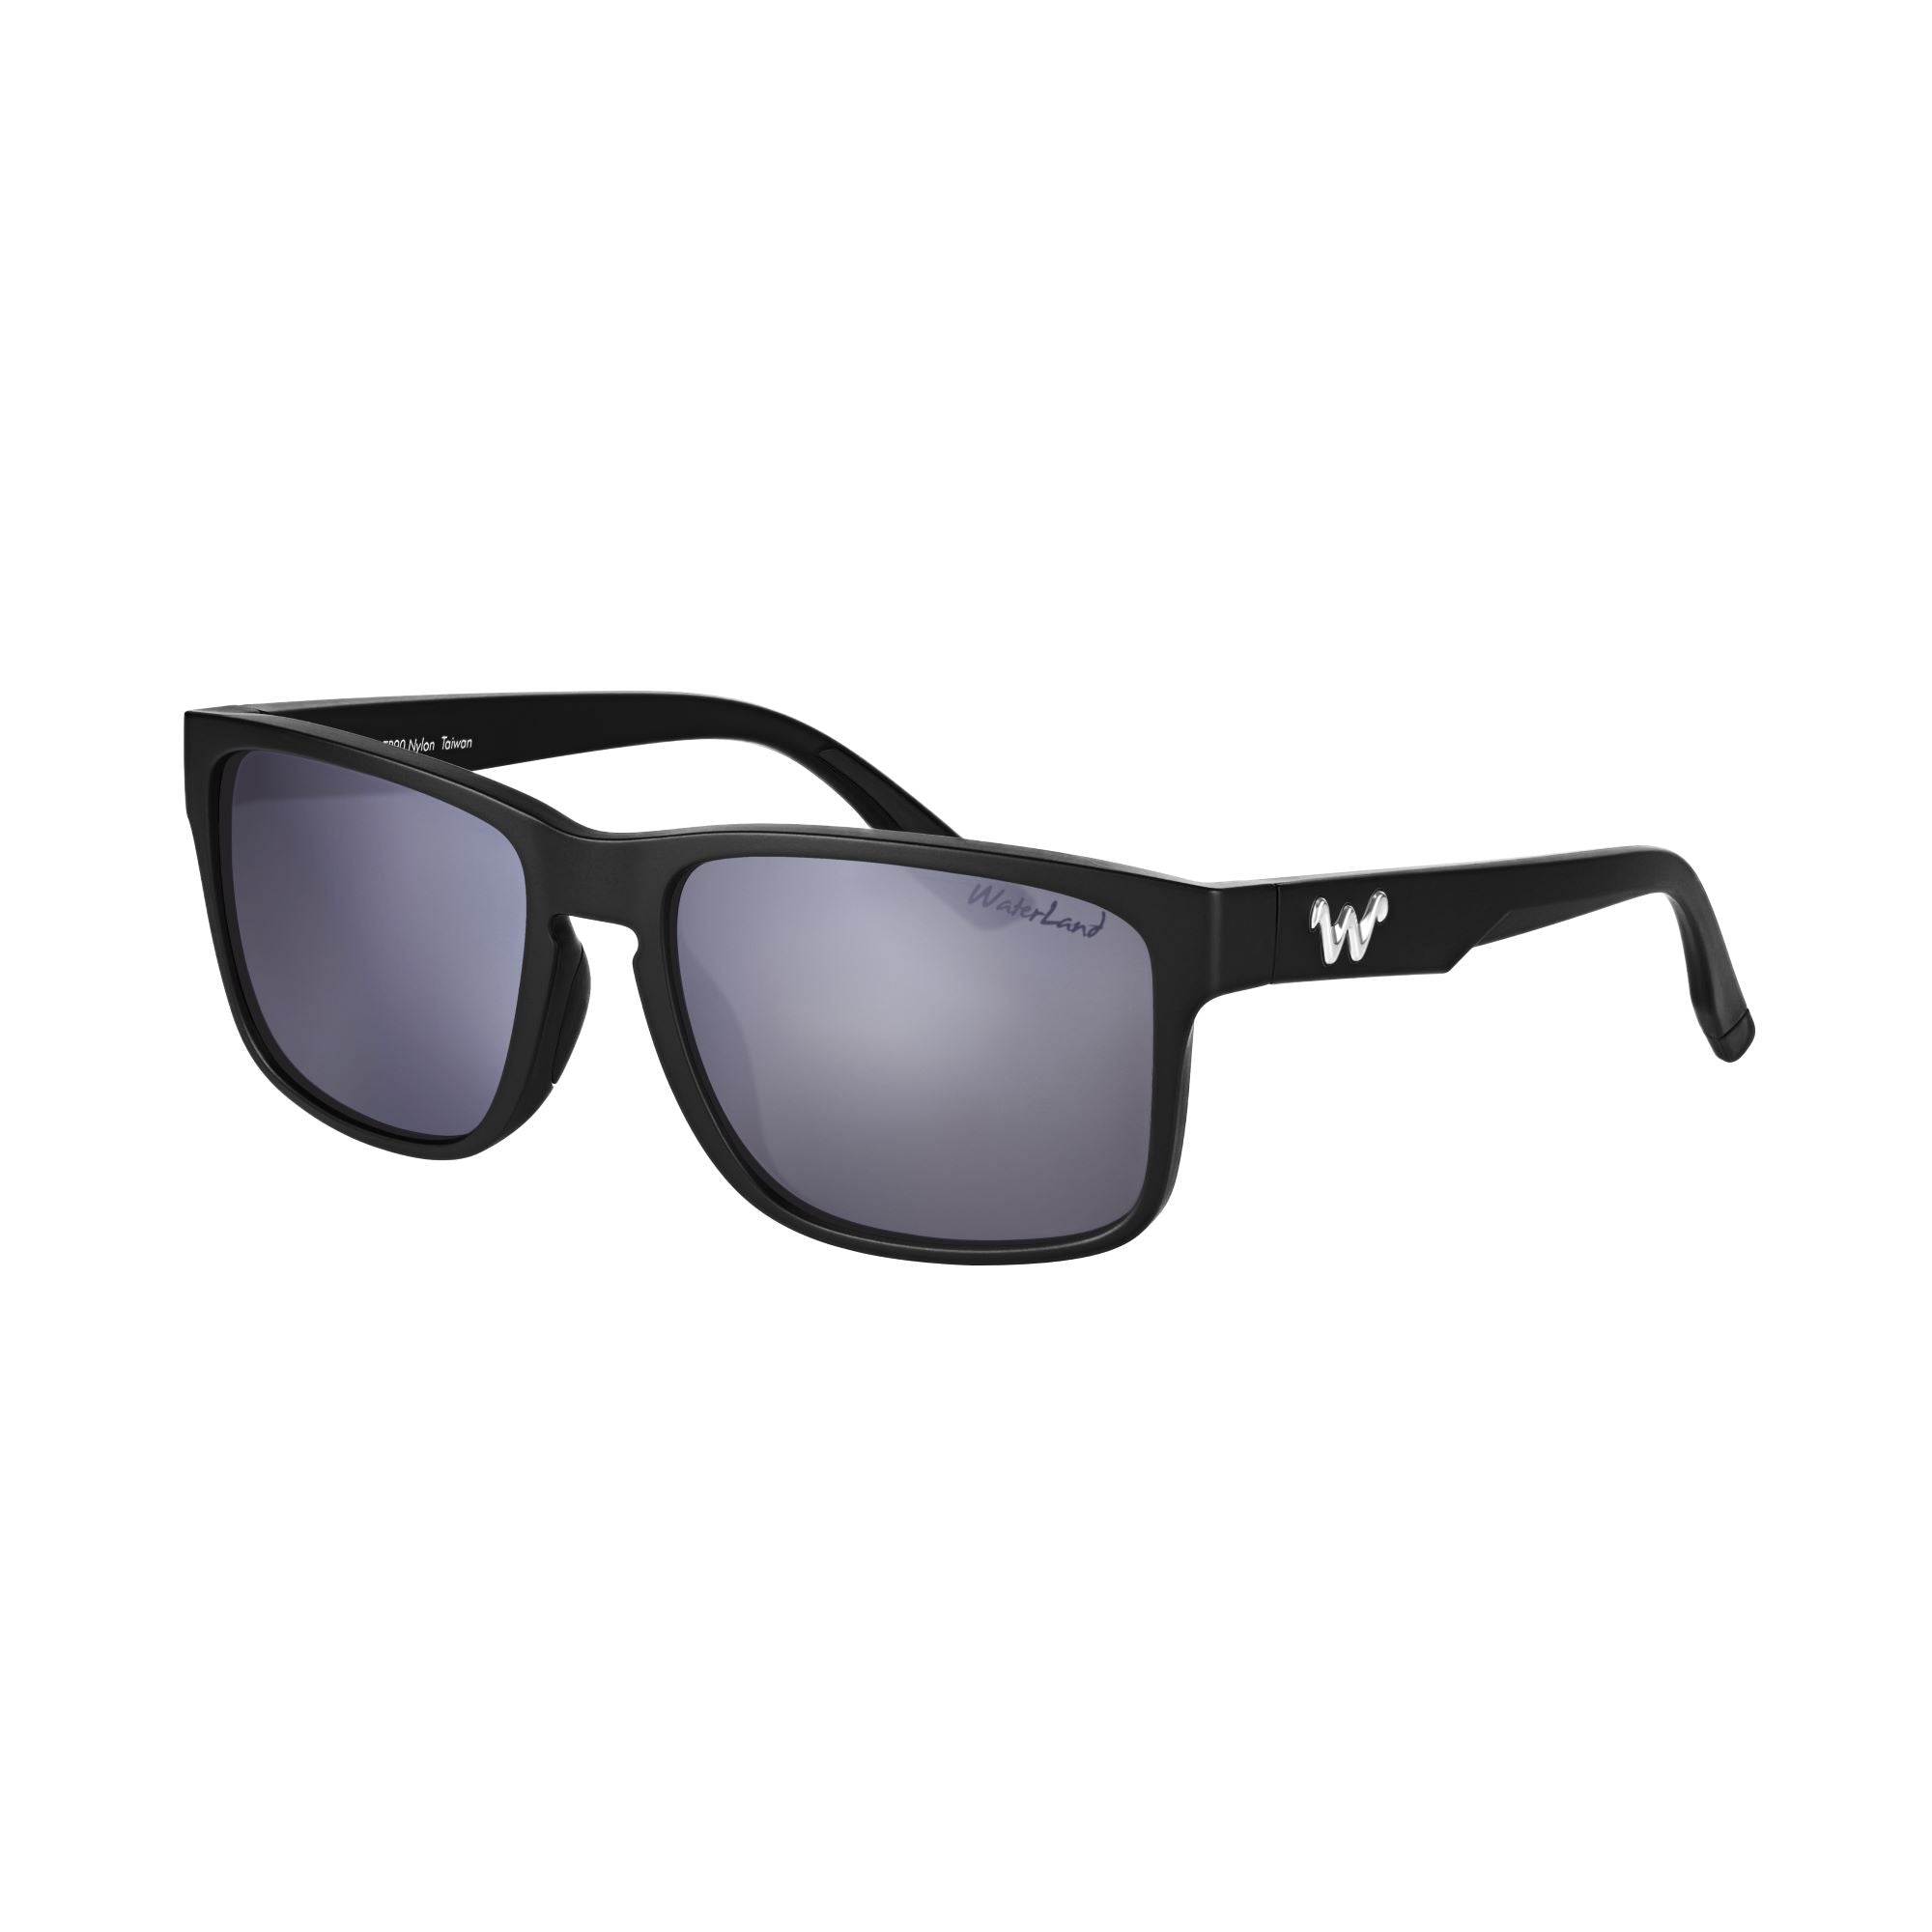 WaterLand Polarized Sunglasses - Sobro - BlackWater